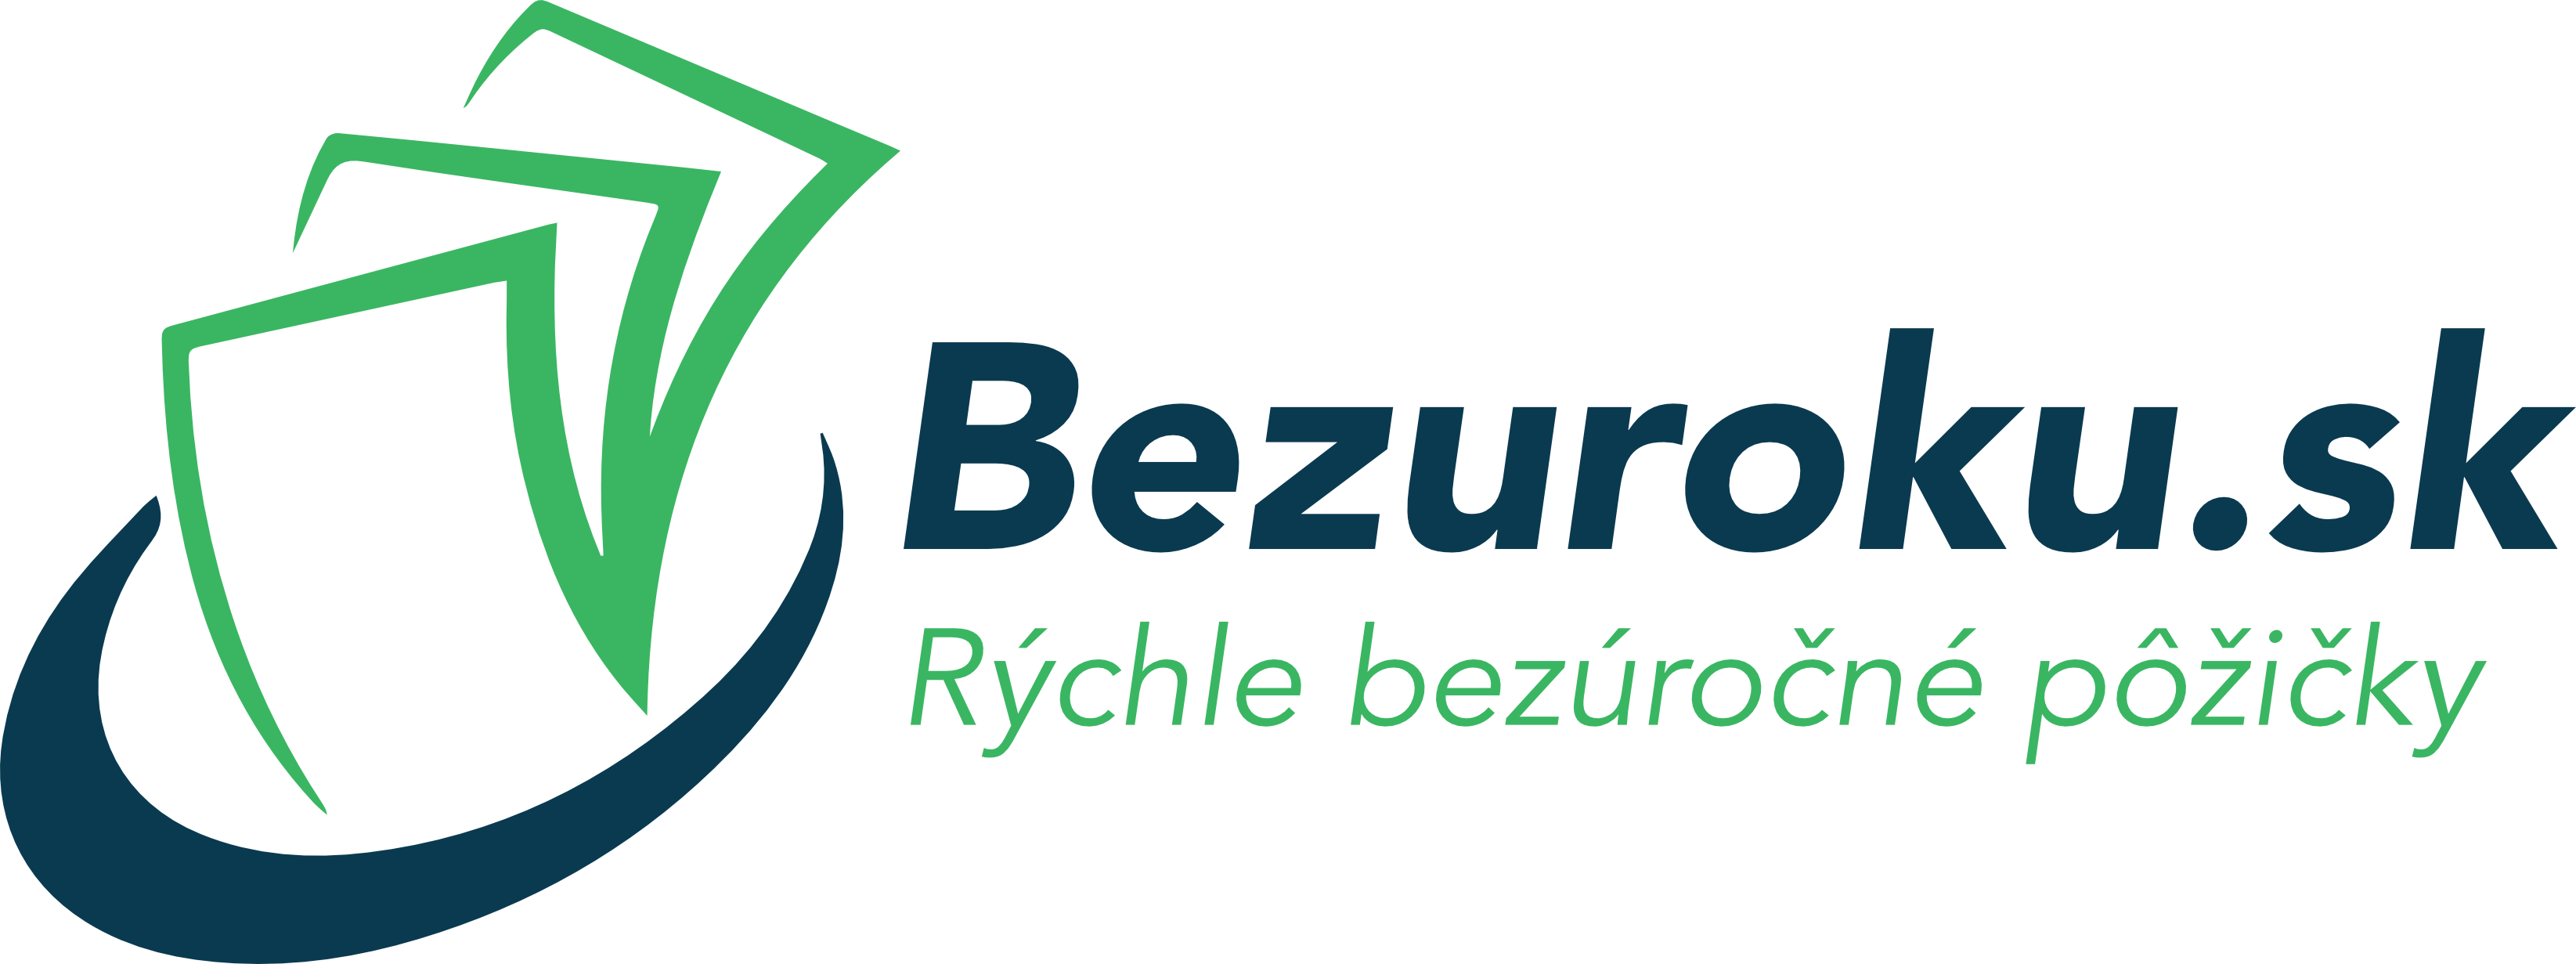 Bezuroku.sk Logo